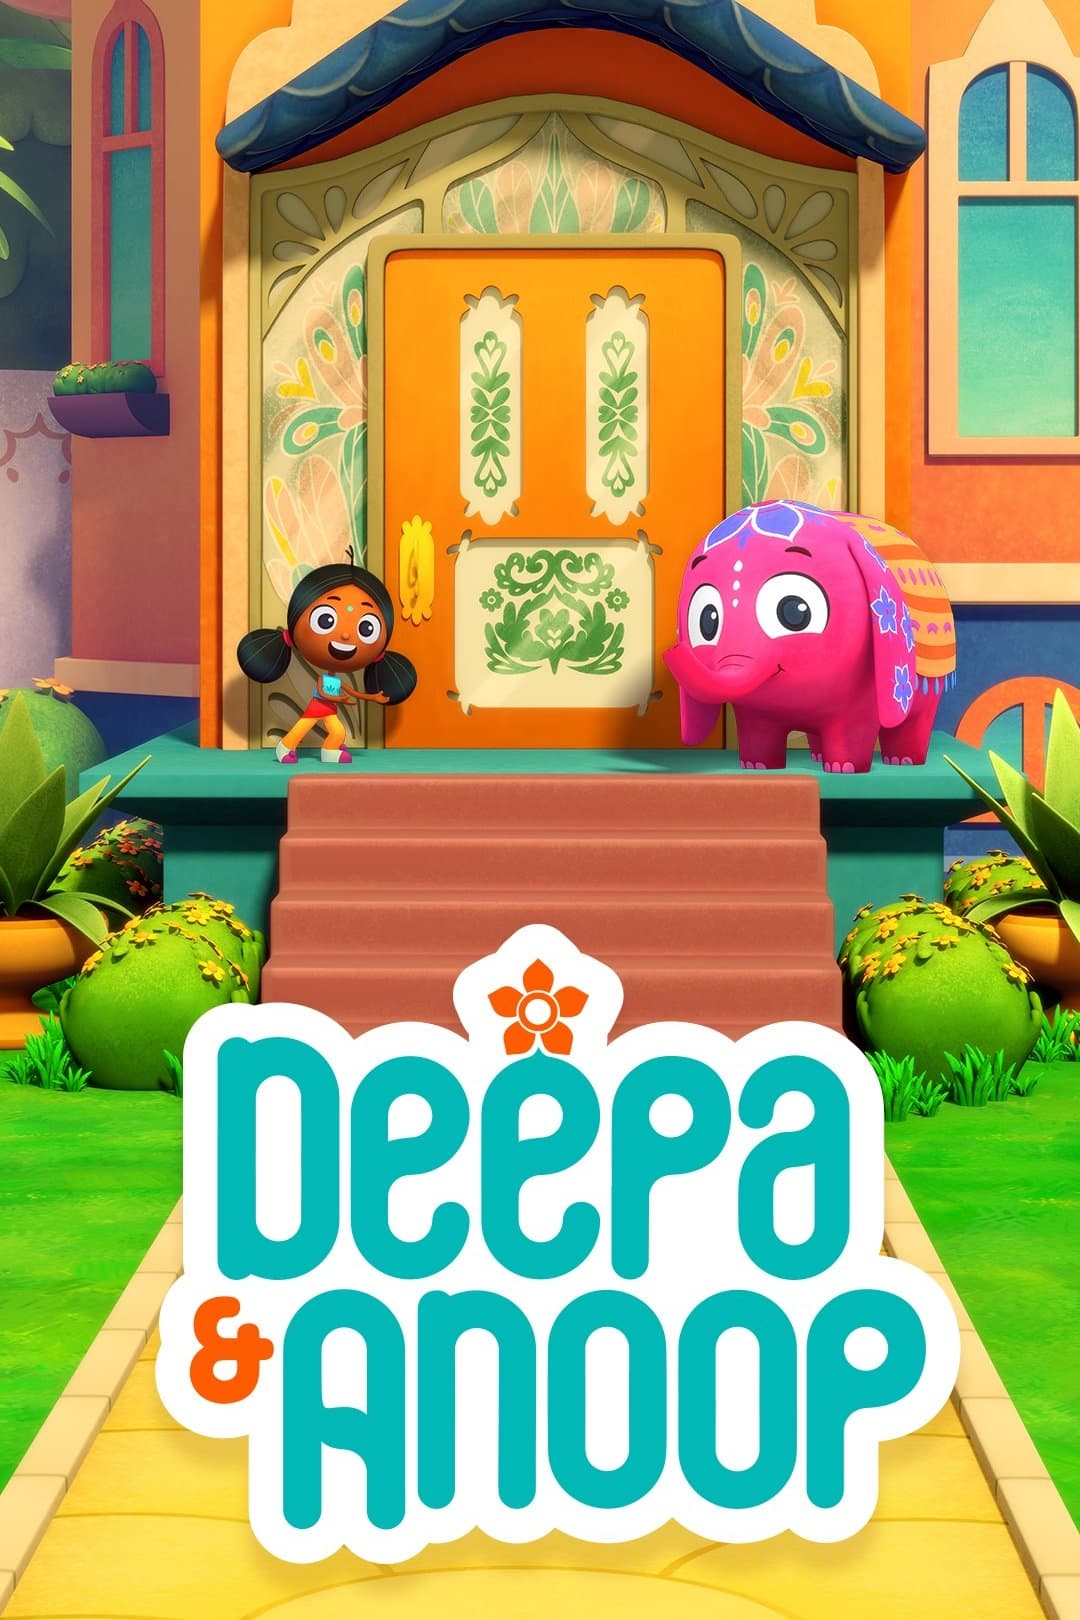 Caratula de Deepa & Anoop (Deepa y Anoop) 